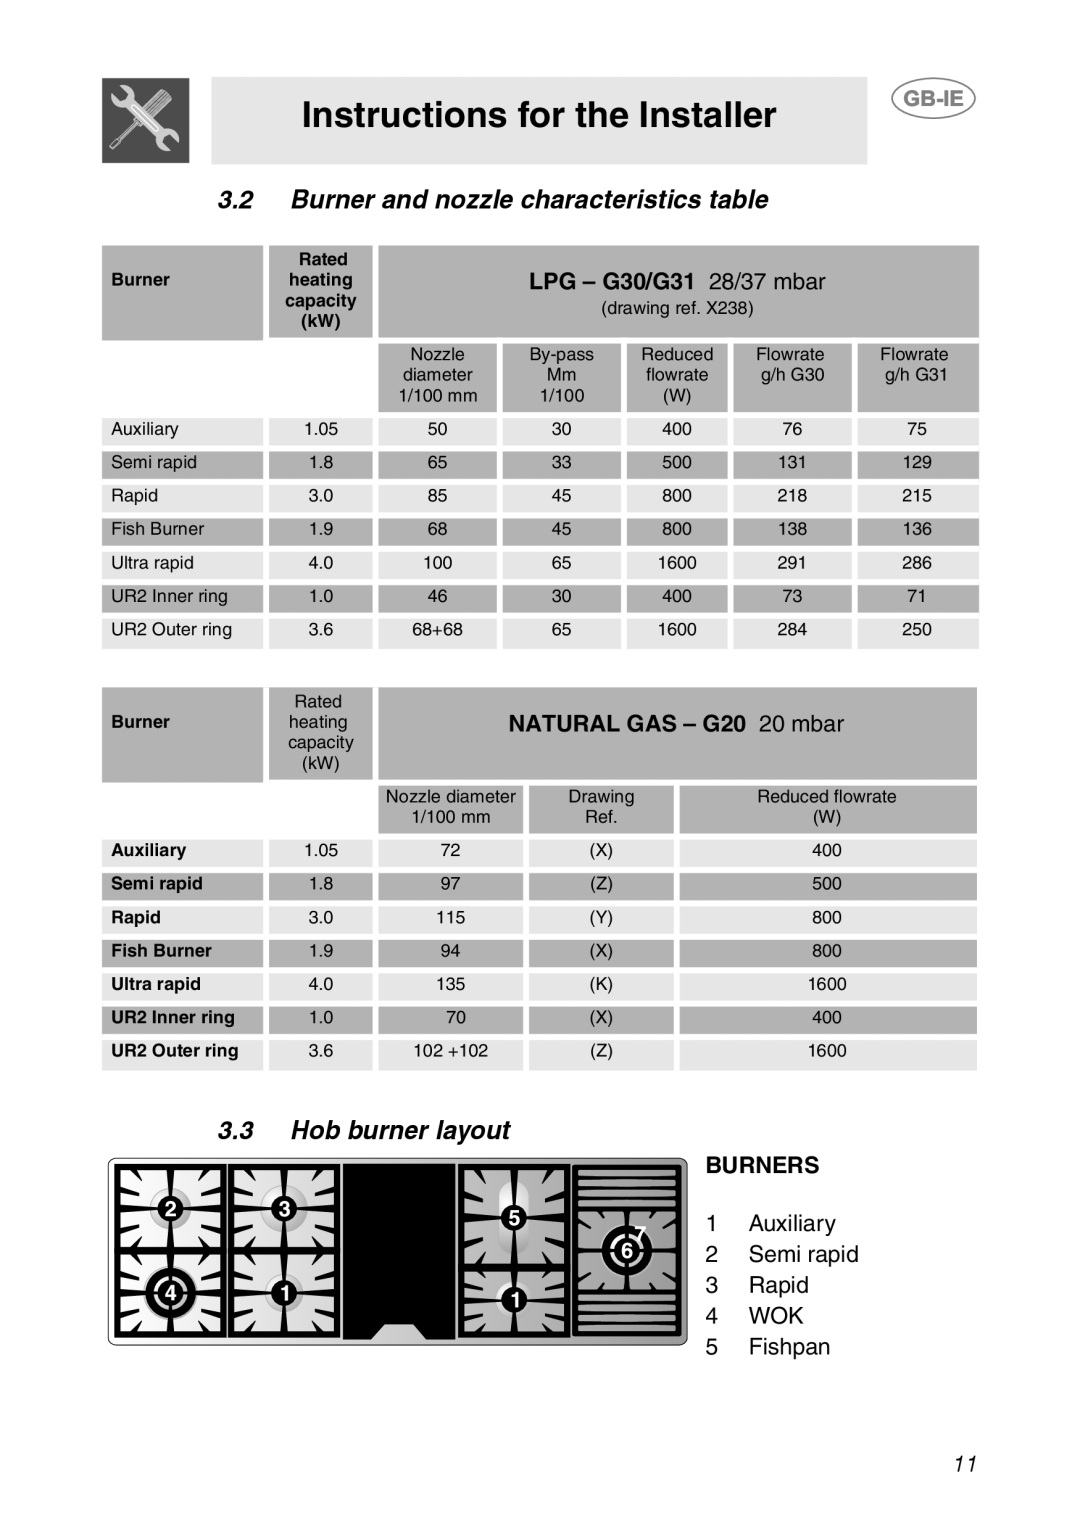 Smeg CS150SA manual Instructions for the Installer, 3.2Burner and nozzle characteristics table, Hob burner layout, Burners 